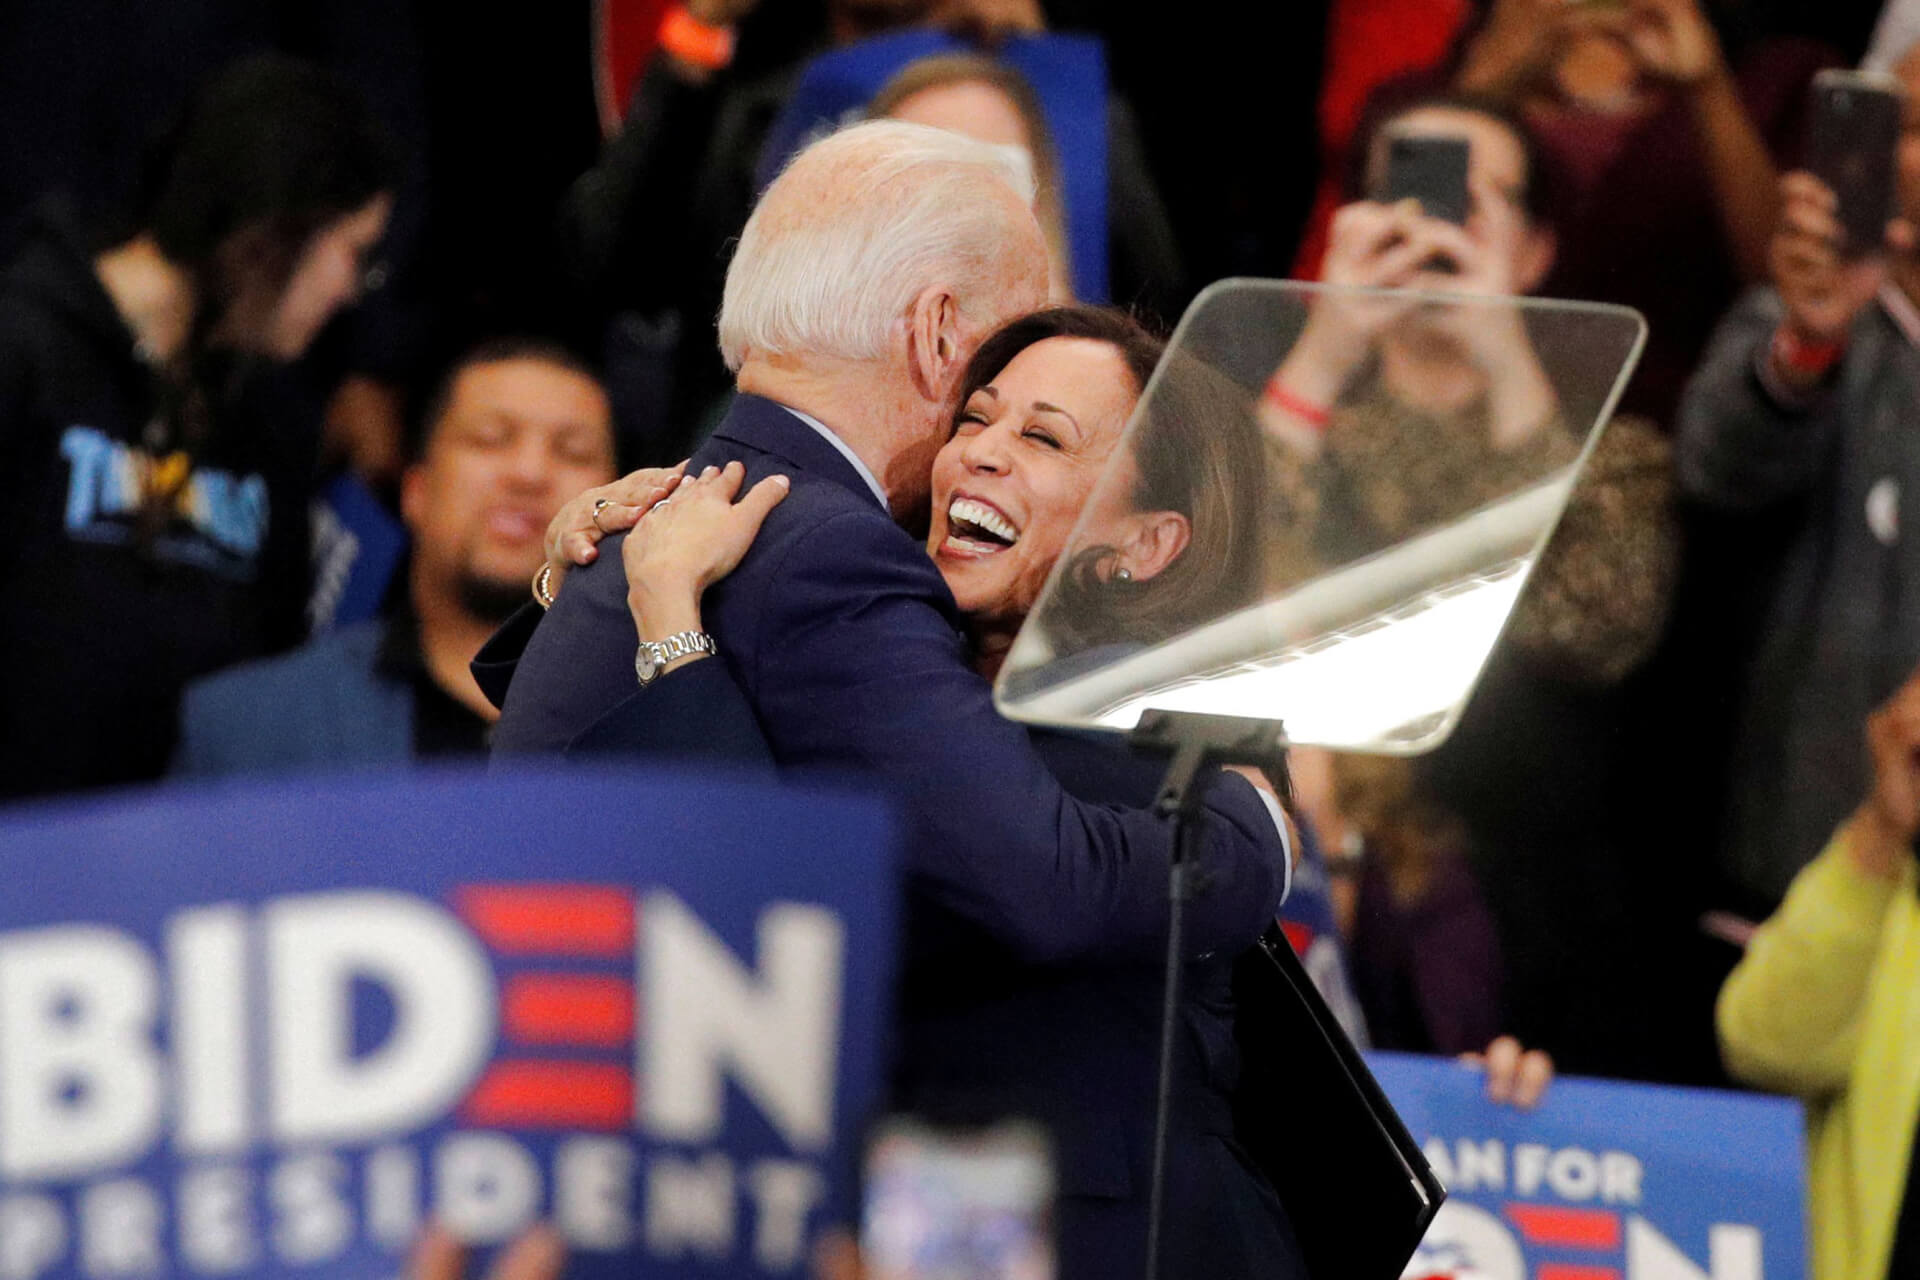 Joe Biden Picks Kamala Harris As His Running Mate